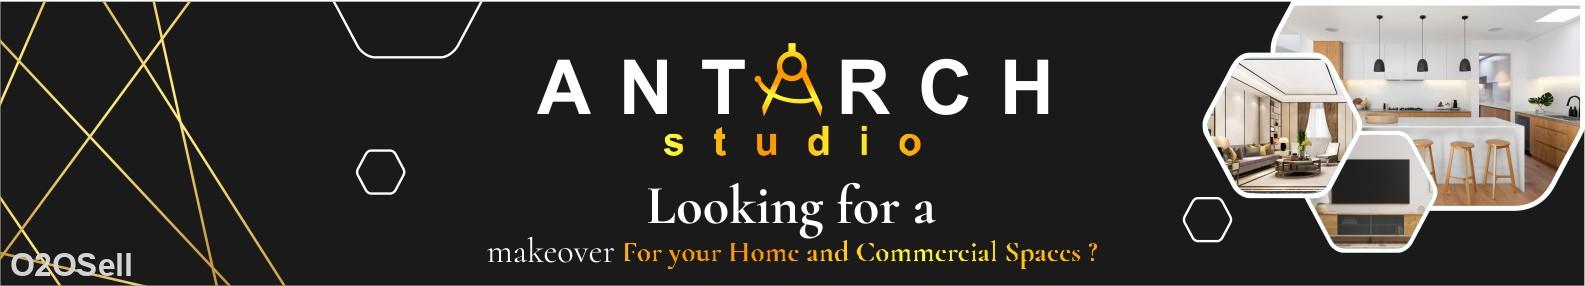 Antarch Studio - Cover Image